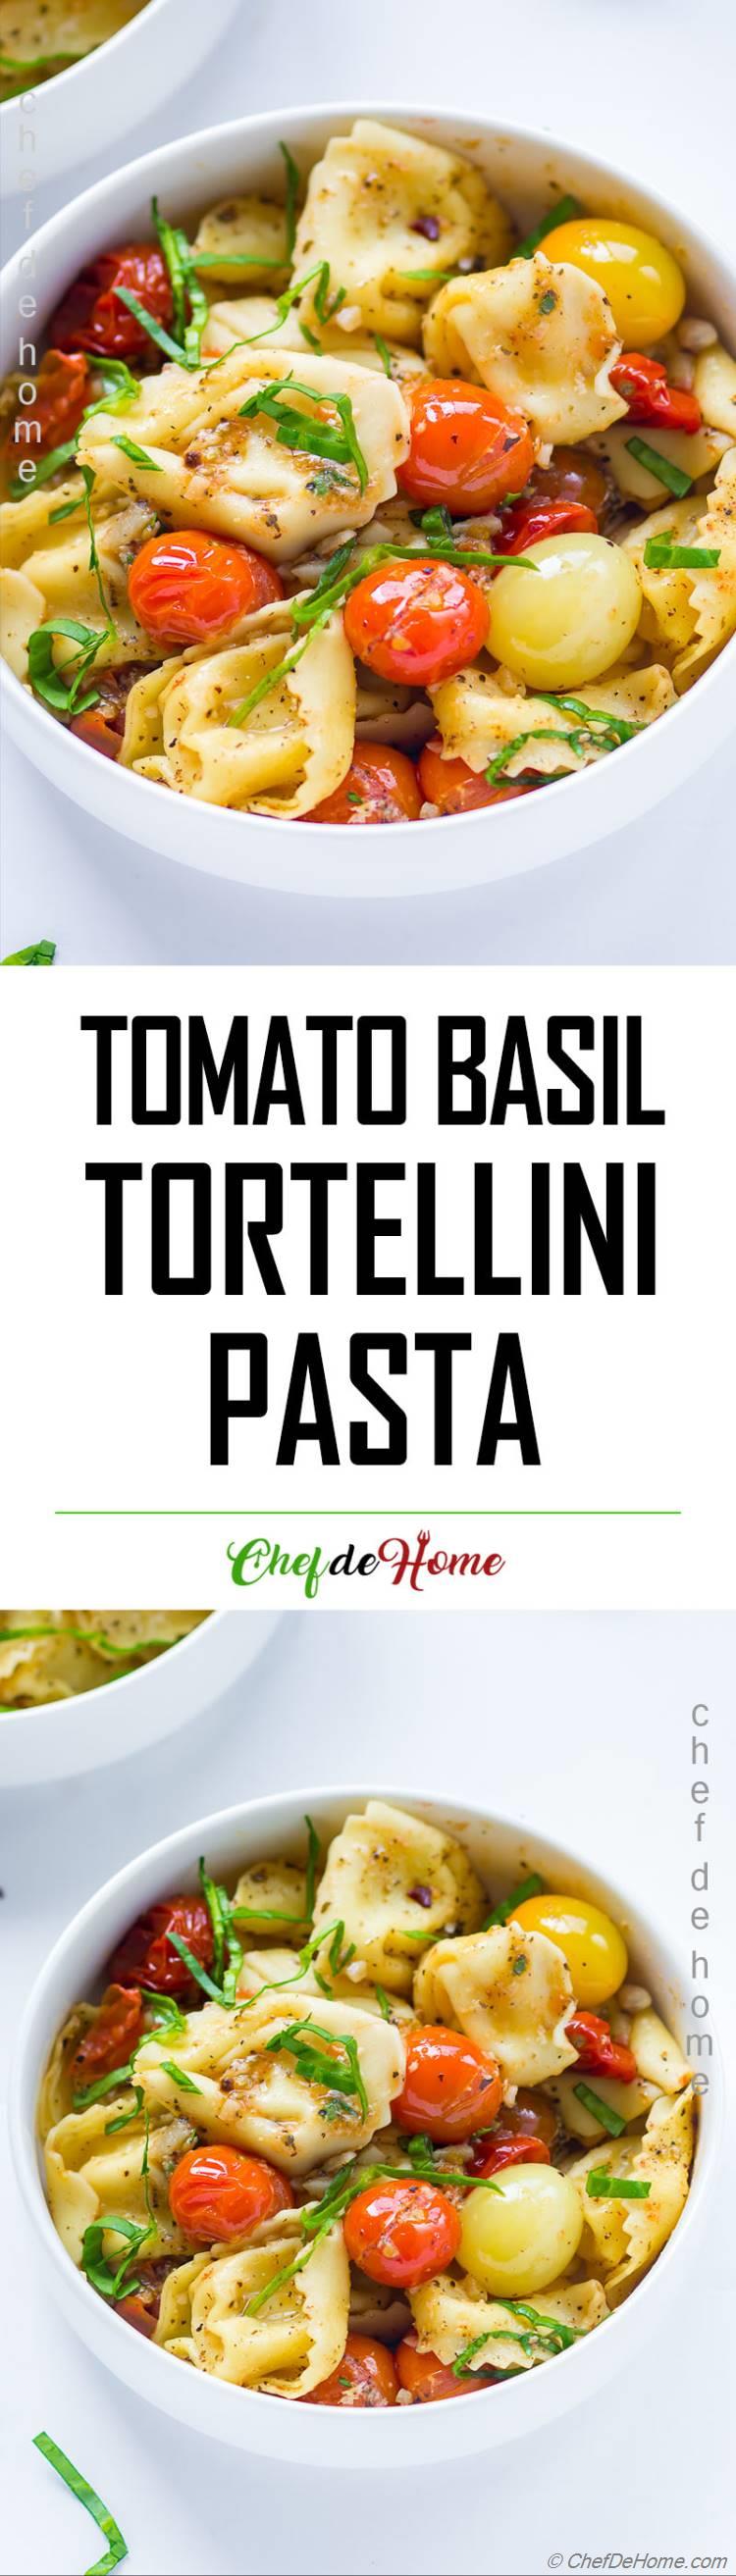 Pasta Dinner with Tortellini Pasta and Tomato Basil Pan Sauce